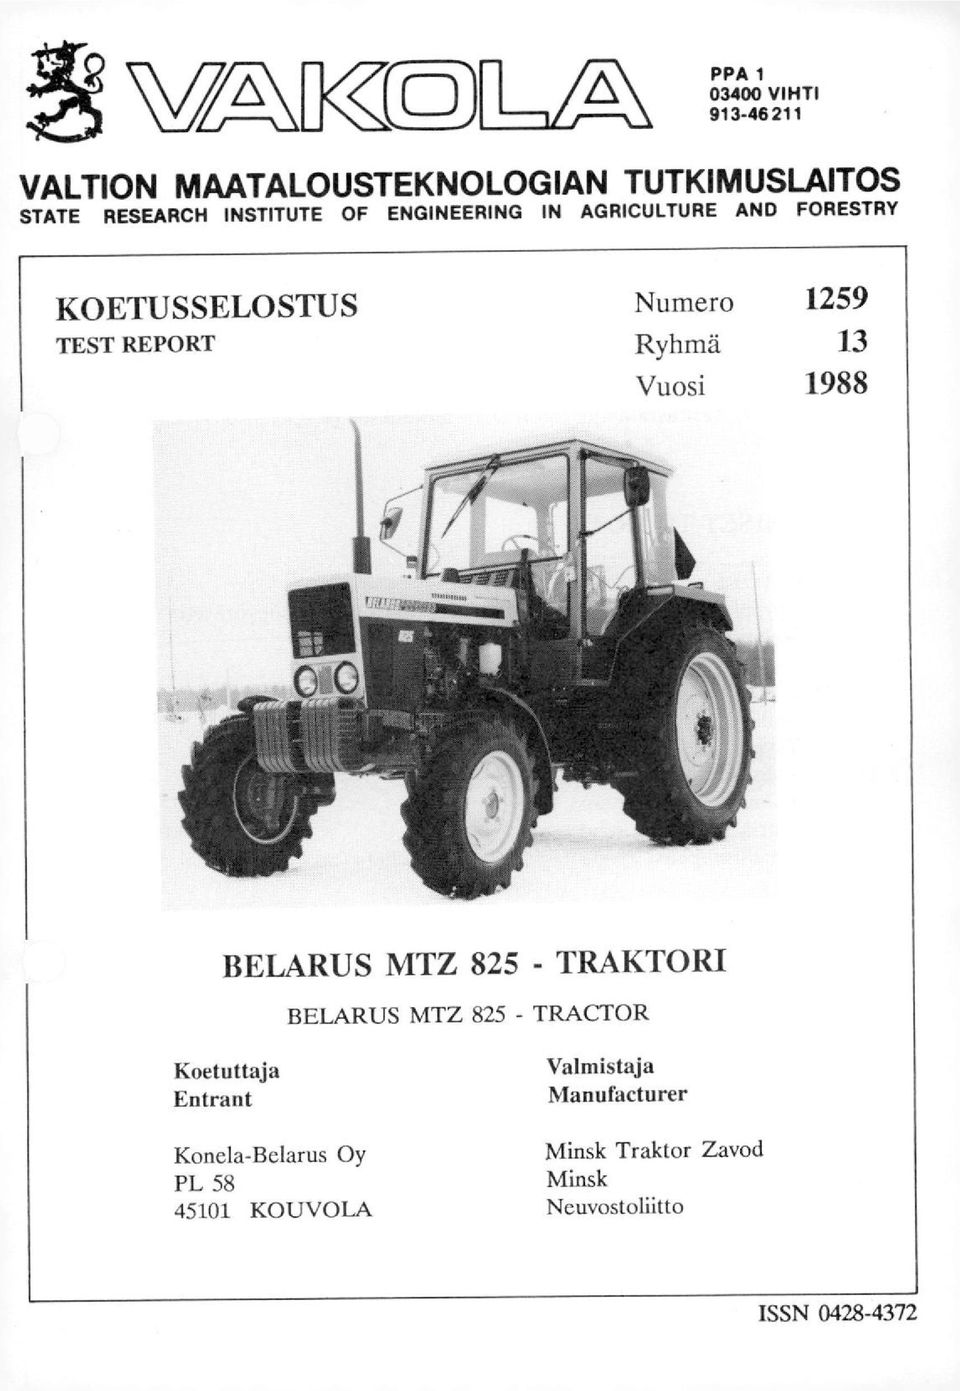 13 Vuosi 1988 BELARUS MTZ 825 - TRAKTORI BELARUS MTZ 825 - TRACTOR Koetuttaja Entrant Valmistaja